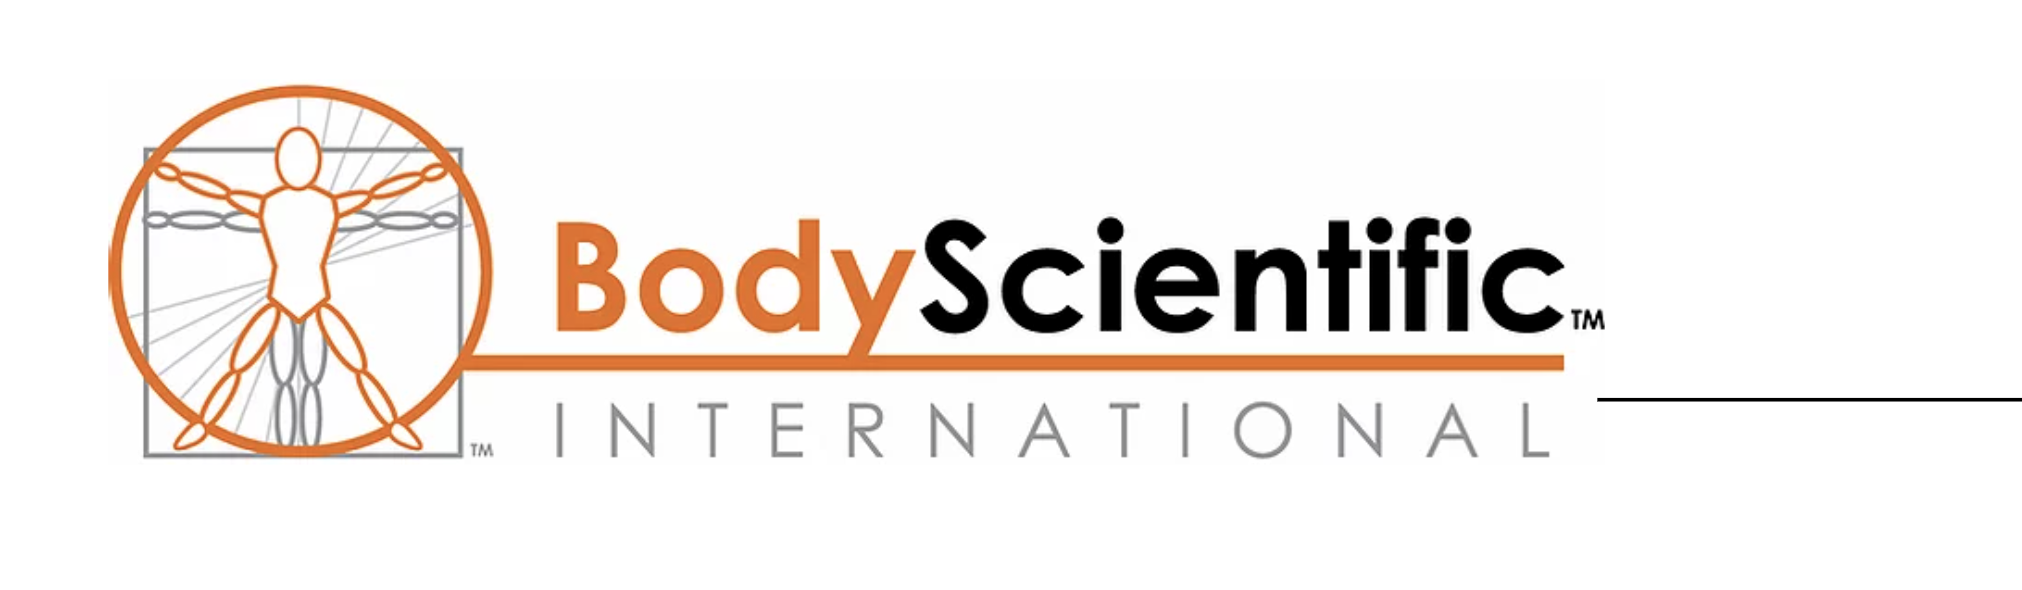 Body Scientific Interantional logo